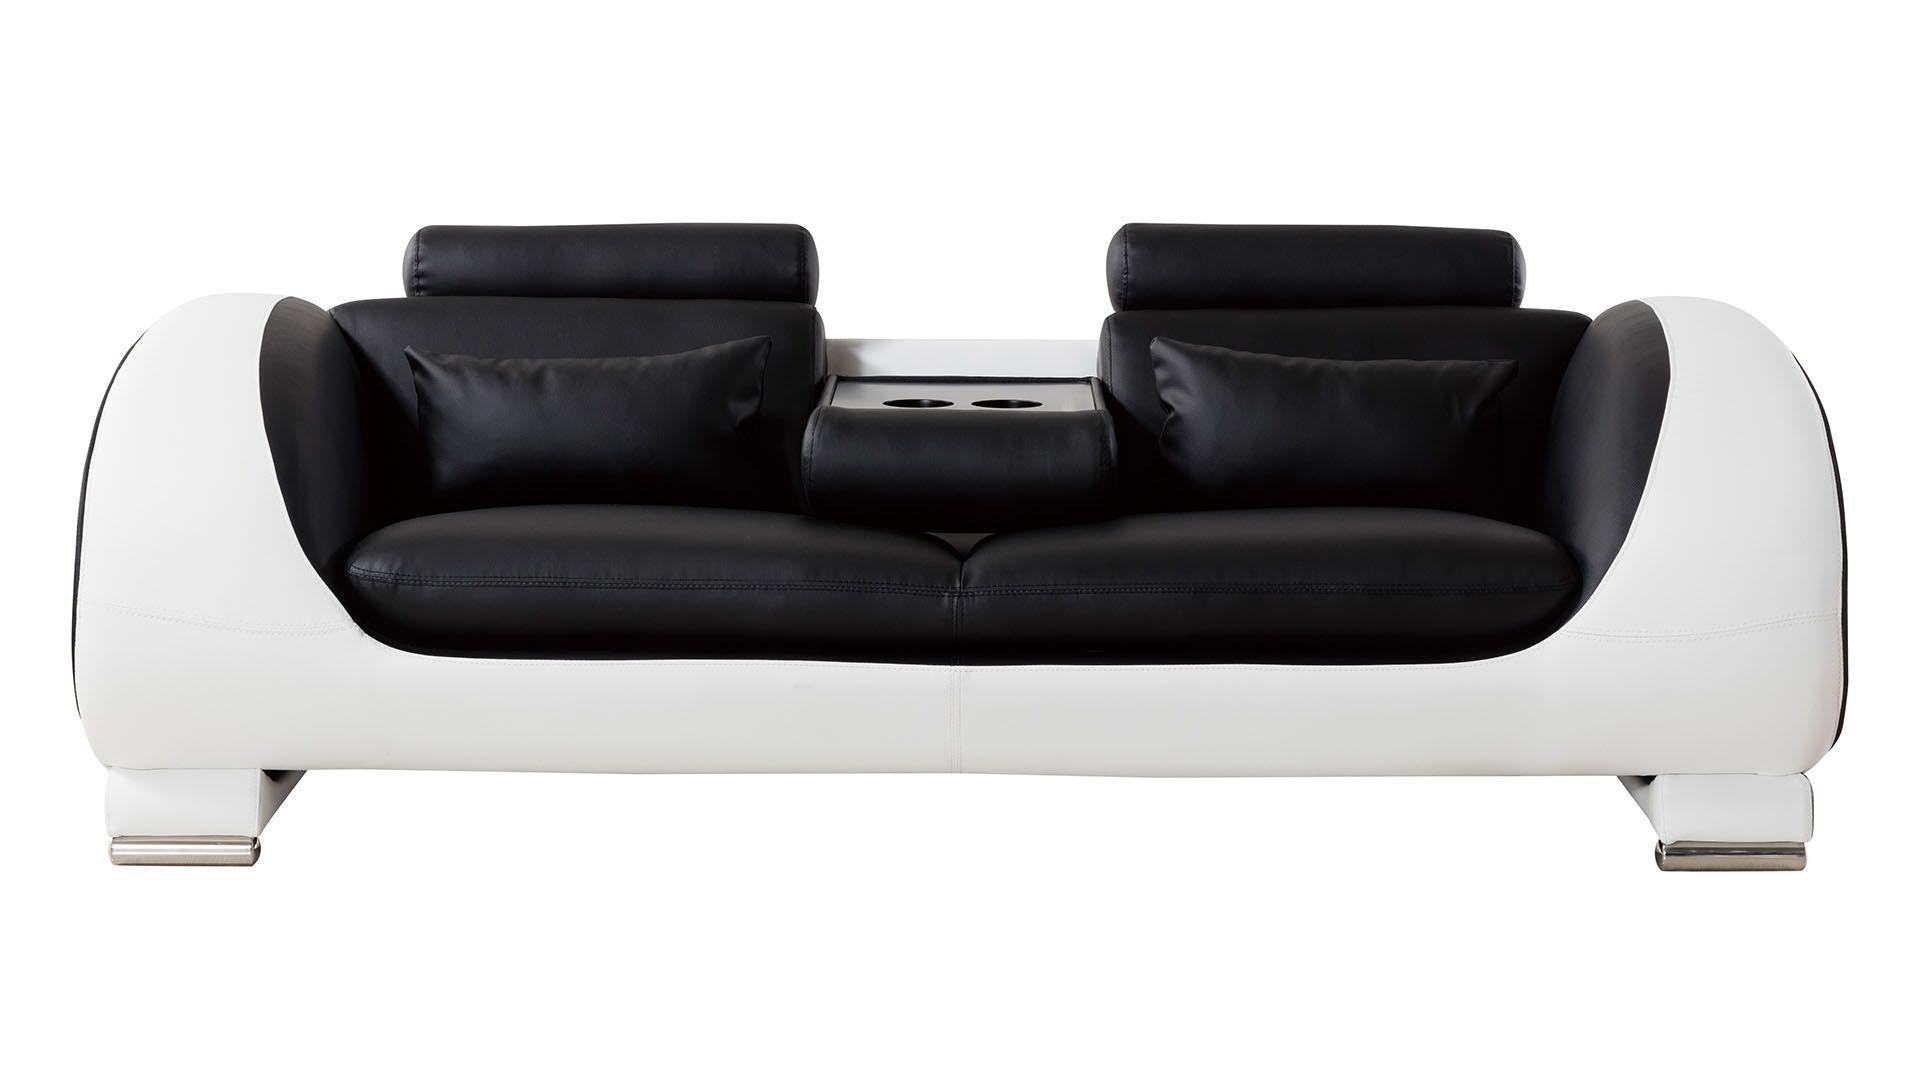 

    
American Eagle Furniture AE-D802-BK-W Sofa Set White/Black AE-D802-BK-W-3PC
